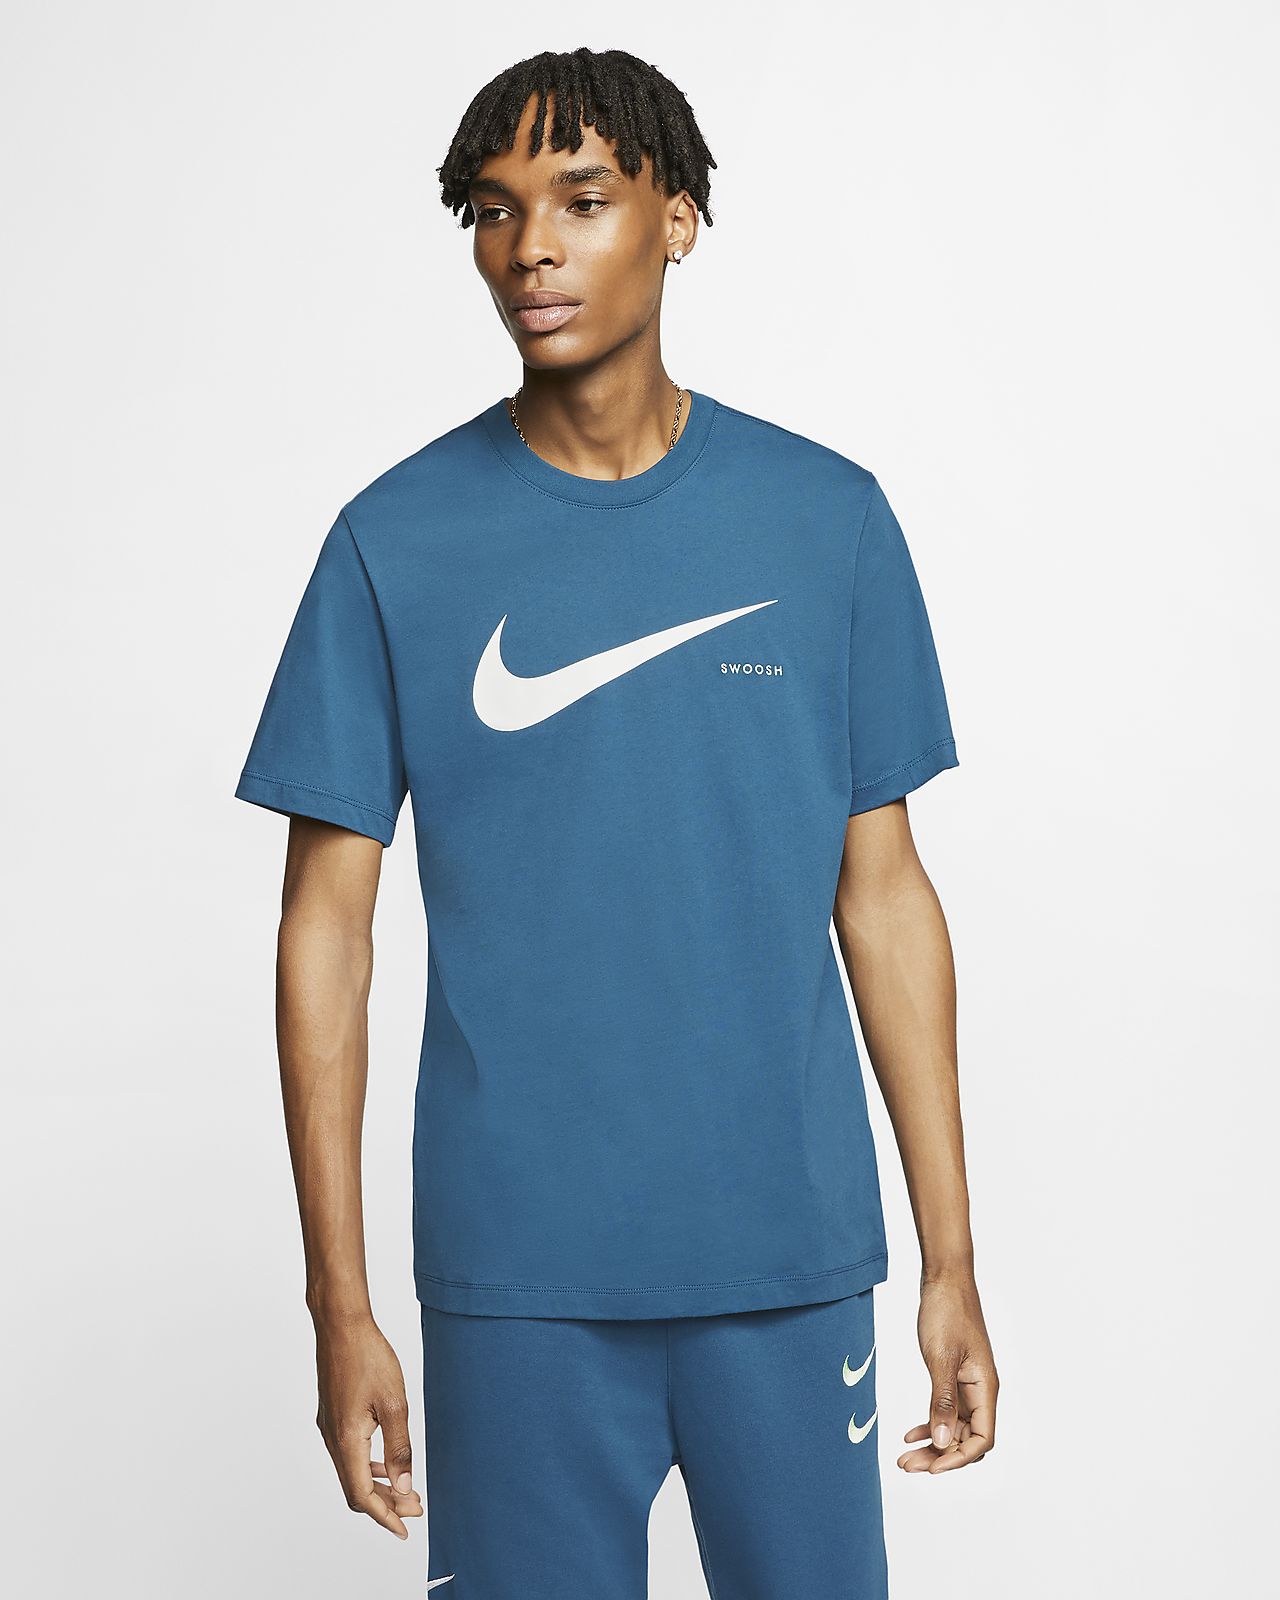 Nike T Shirt Design